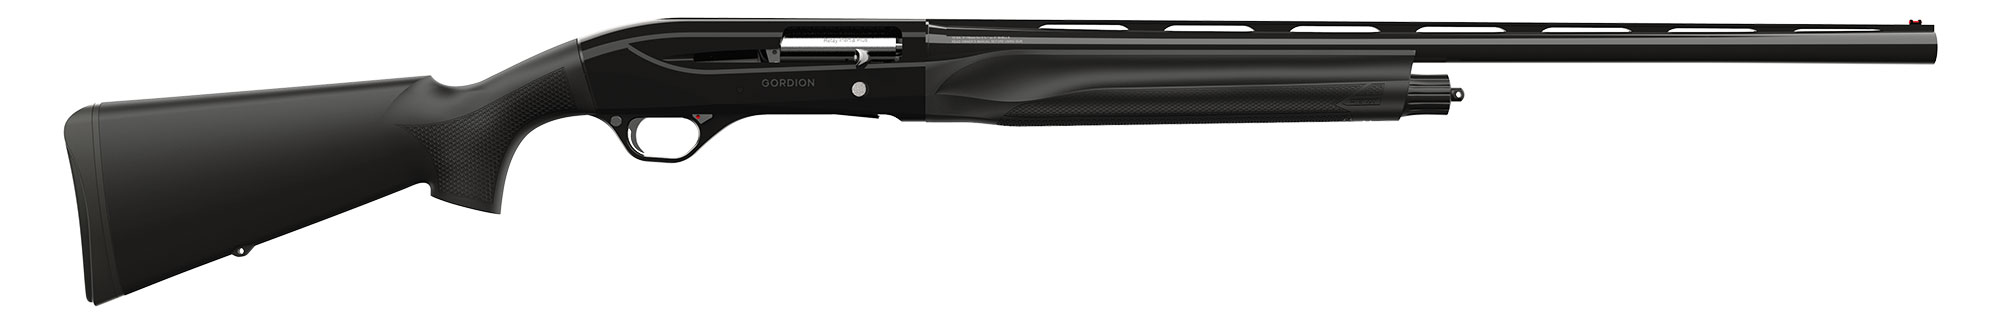 Retay Gordion Shotgun ONYX model in polished back finish.